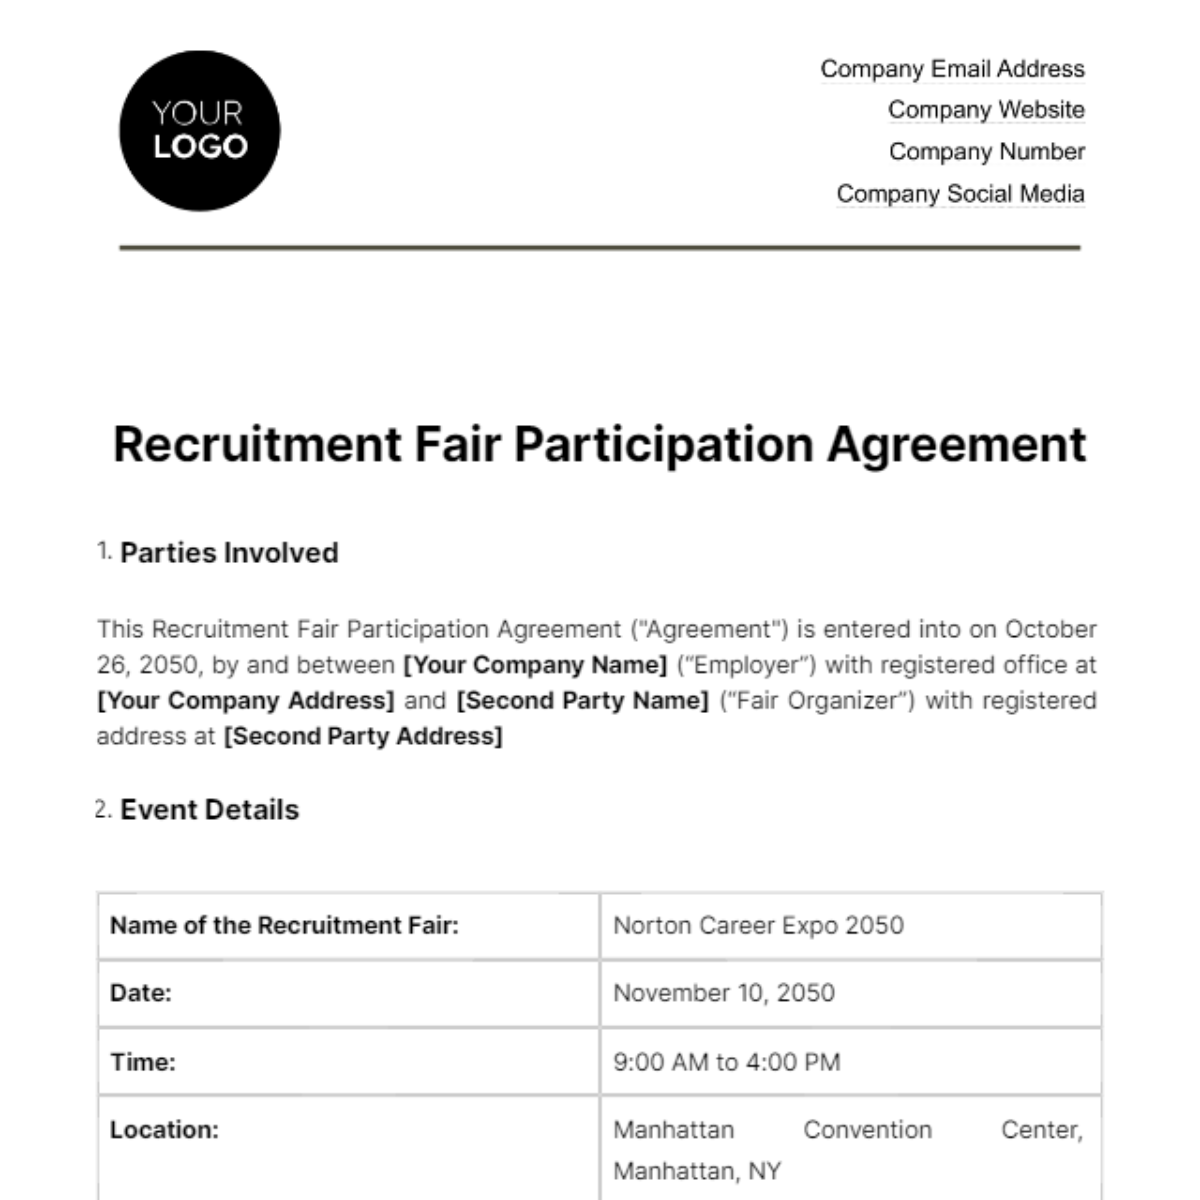 Recruitment Fair Participation Agreement HR Template